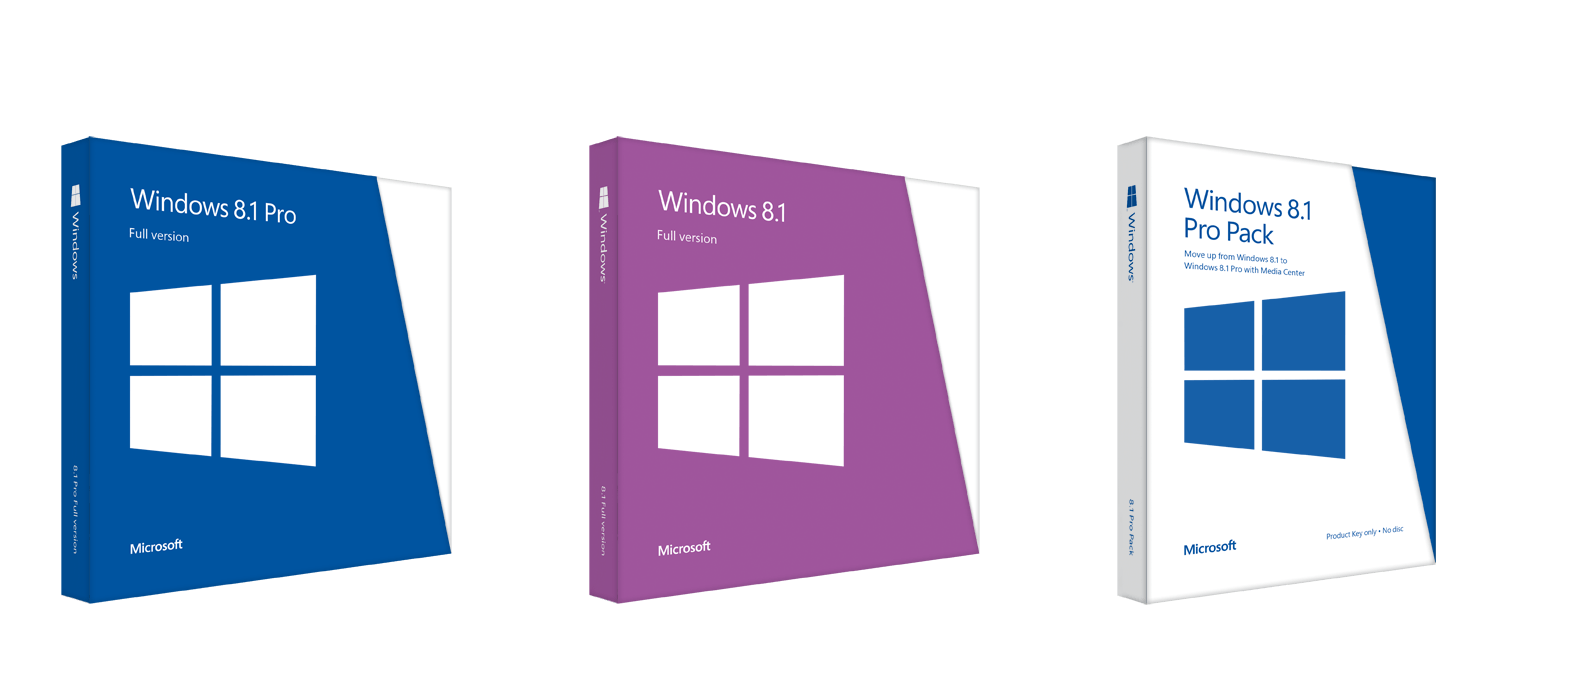 Windows Future Logo - The Future of Microsoft Depends on Windows Being Free